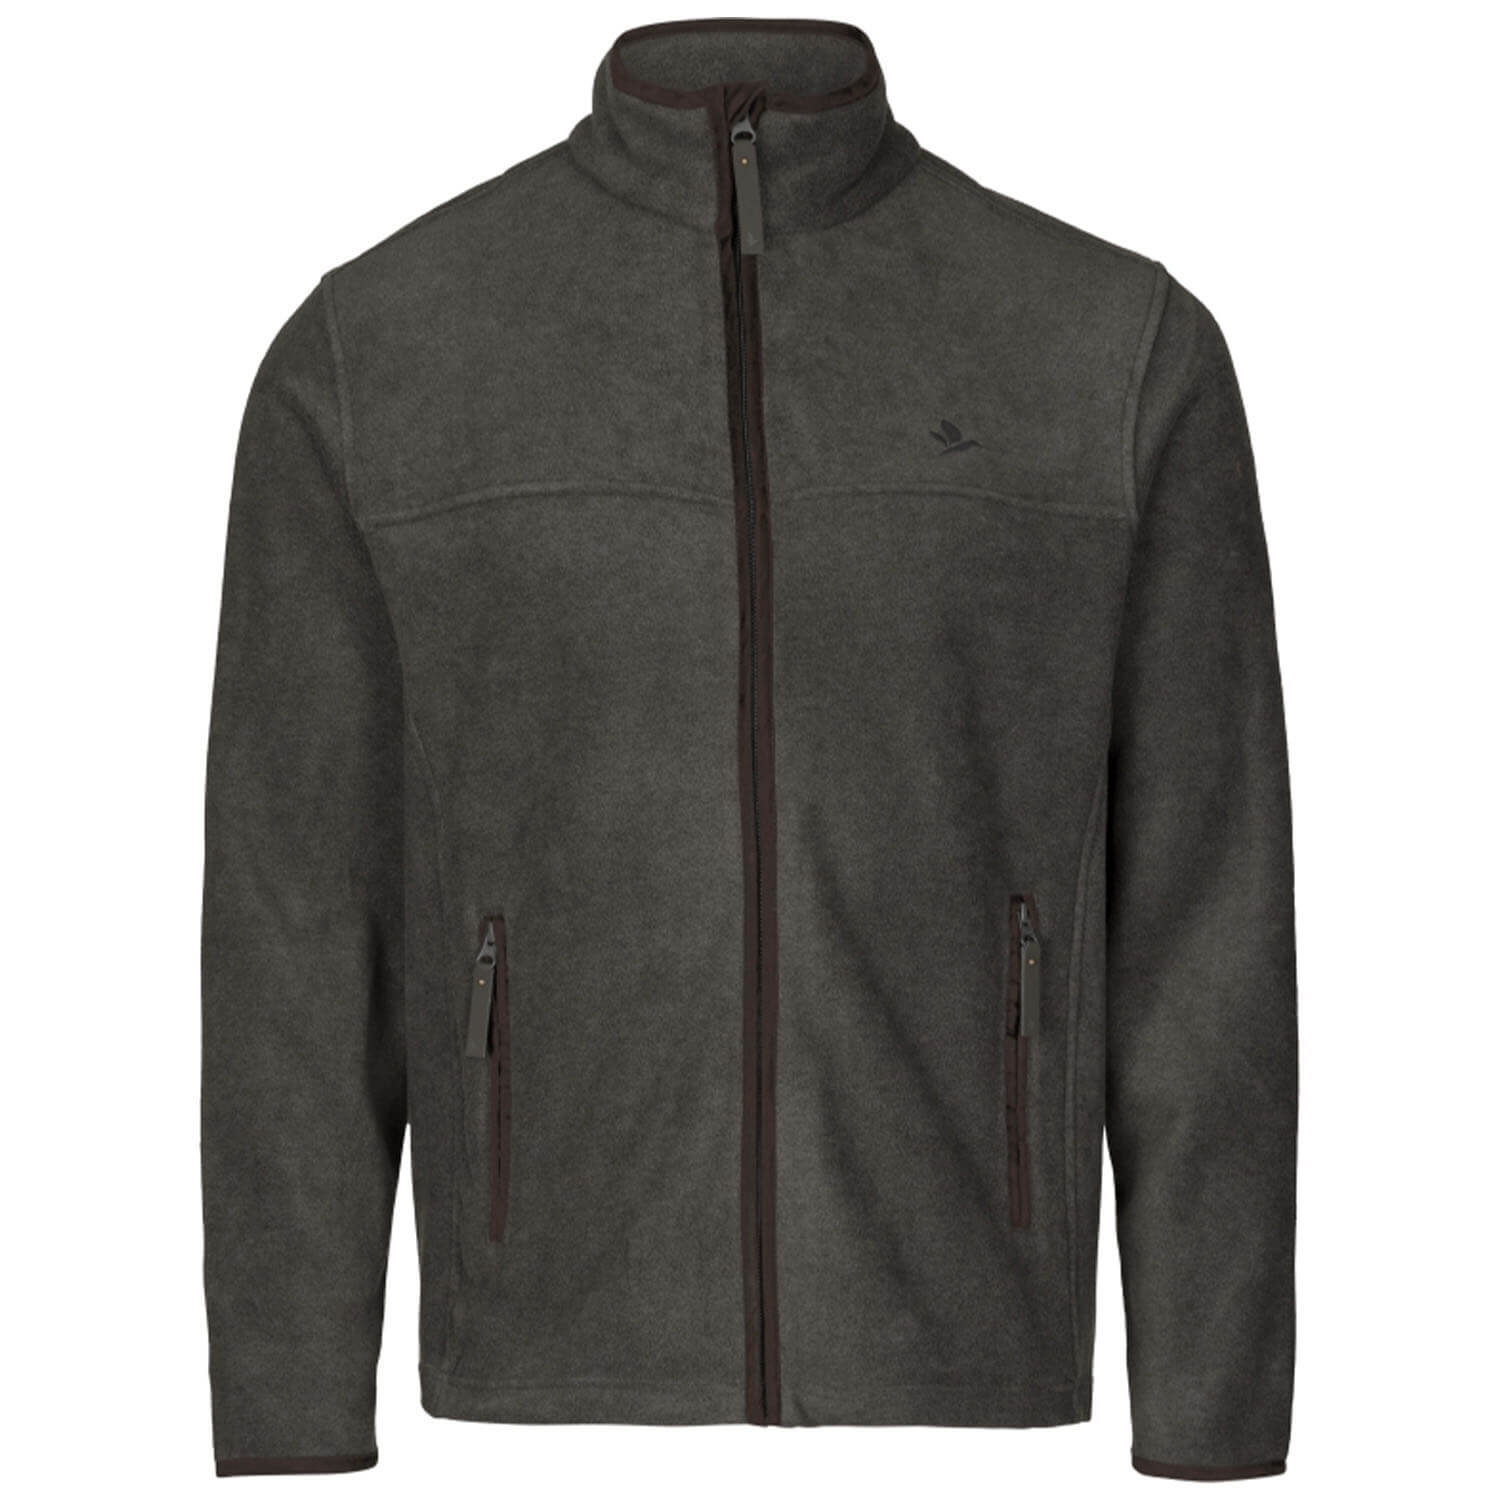  Seeland fleece jacket Woodcock Earl (Dark Grey Melange) - Hunting Jackets